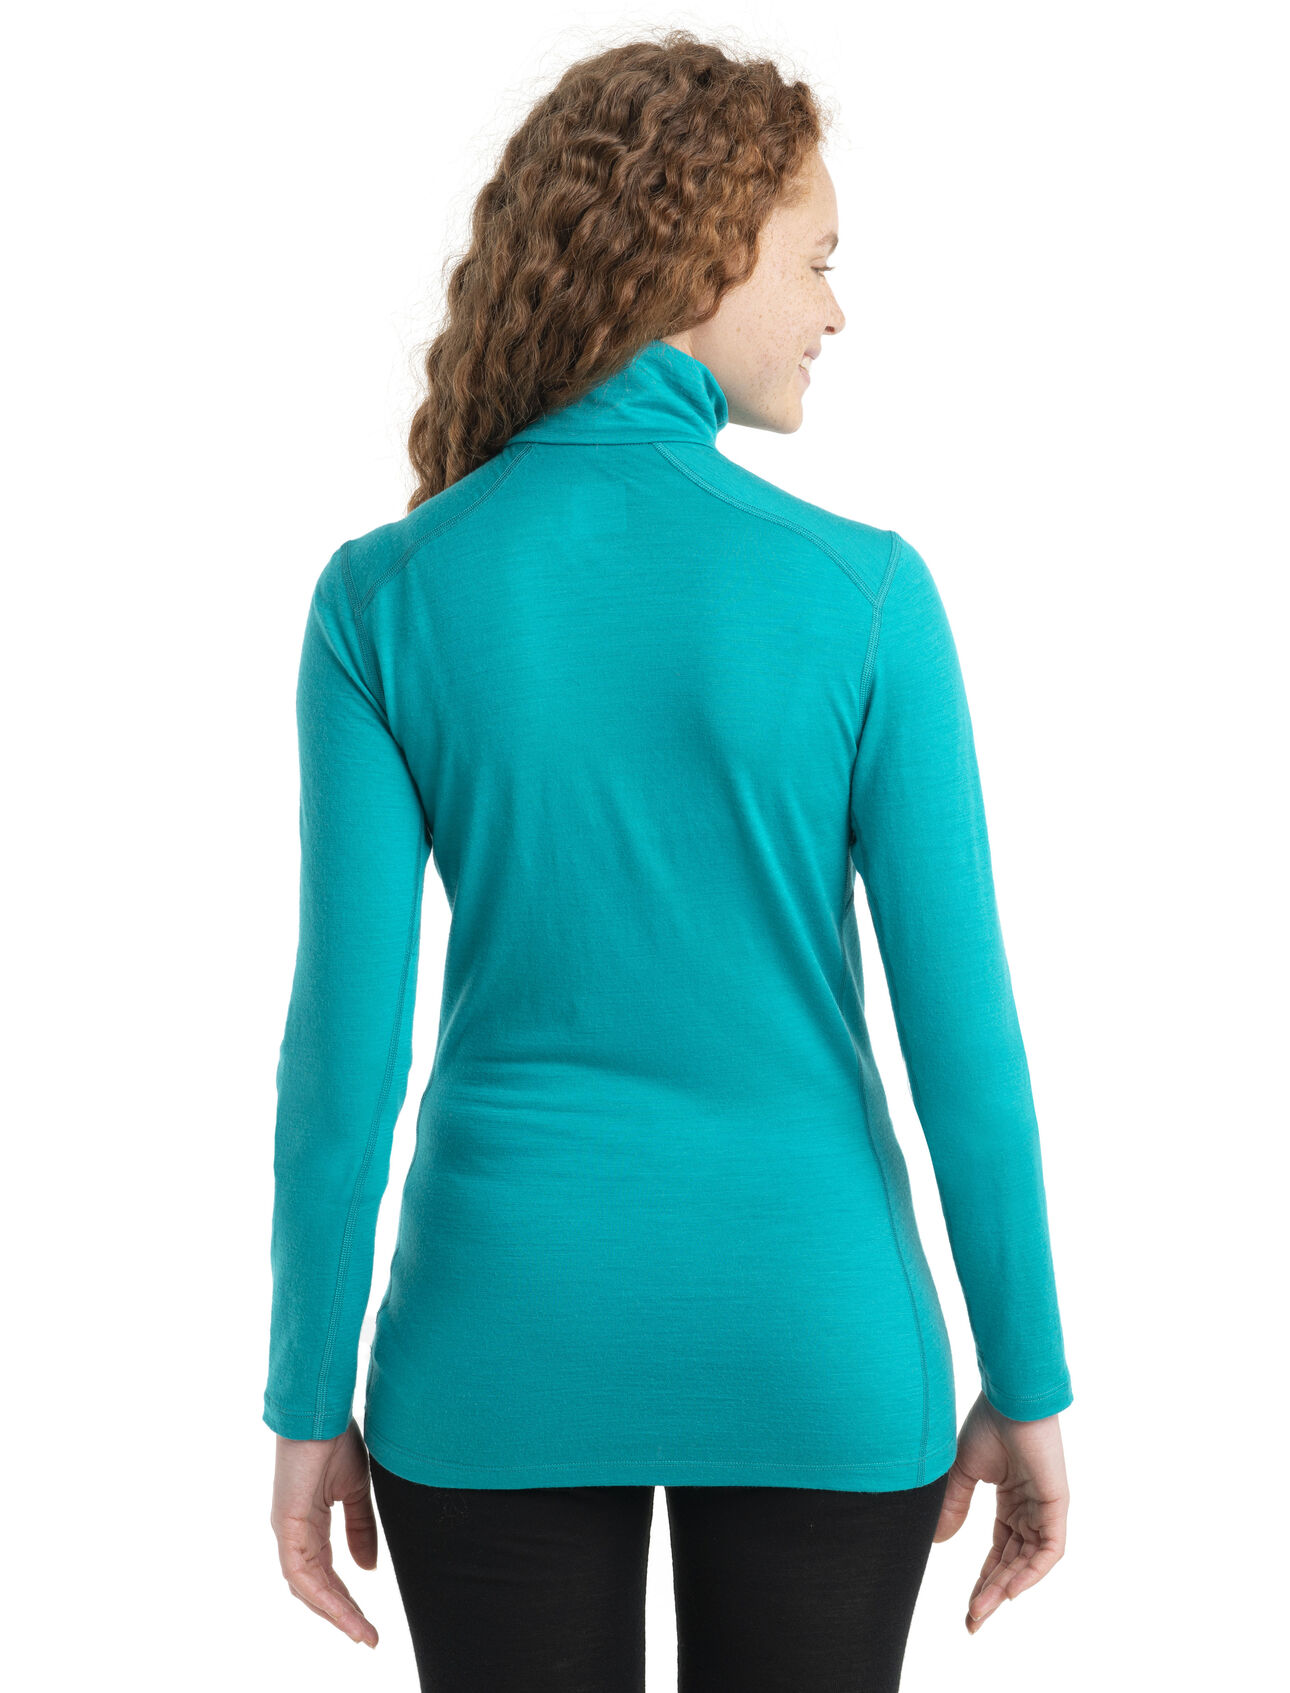 Women's Blouse Fashion Digital Printing Zipper Long-sleeved Casual